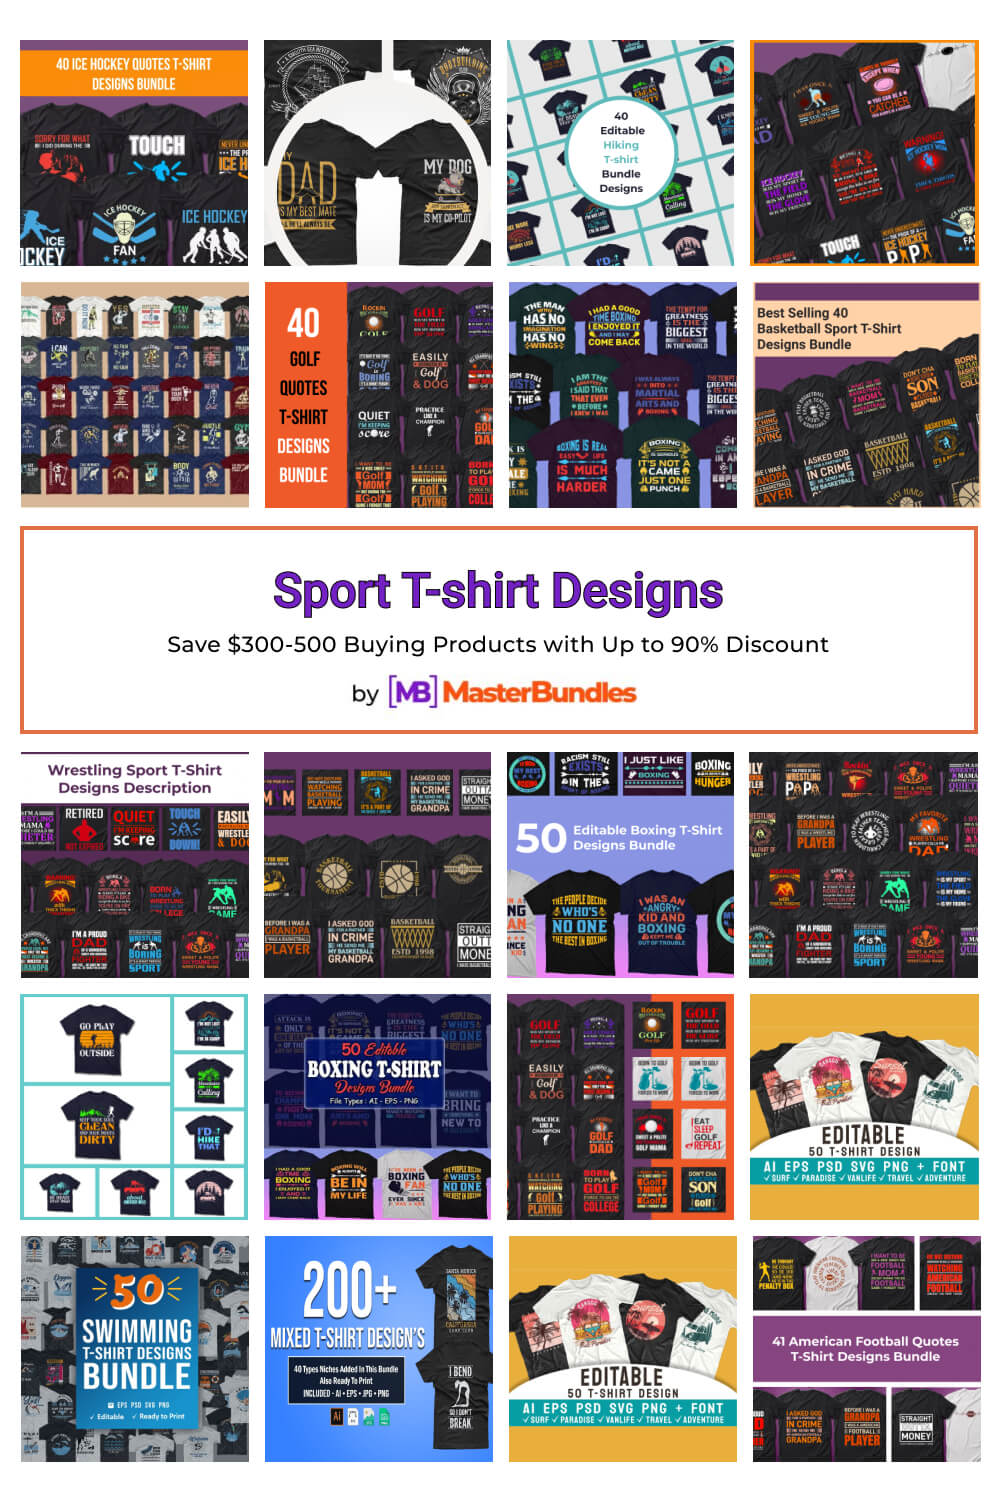 sport t shirt designs pinterest image.